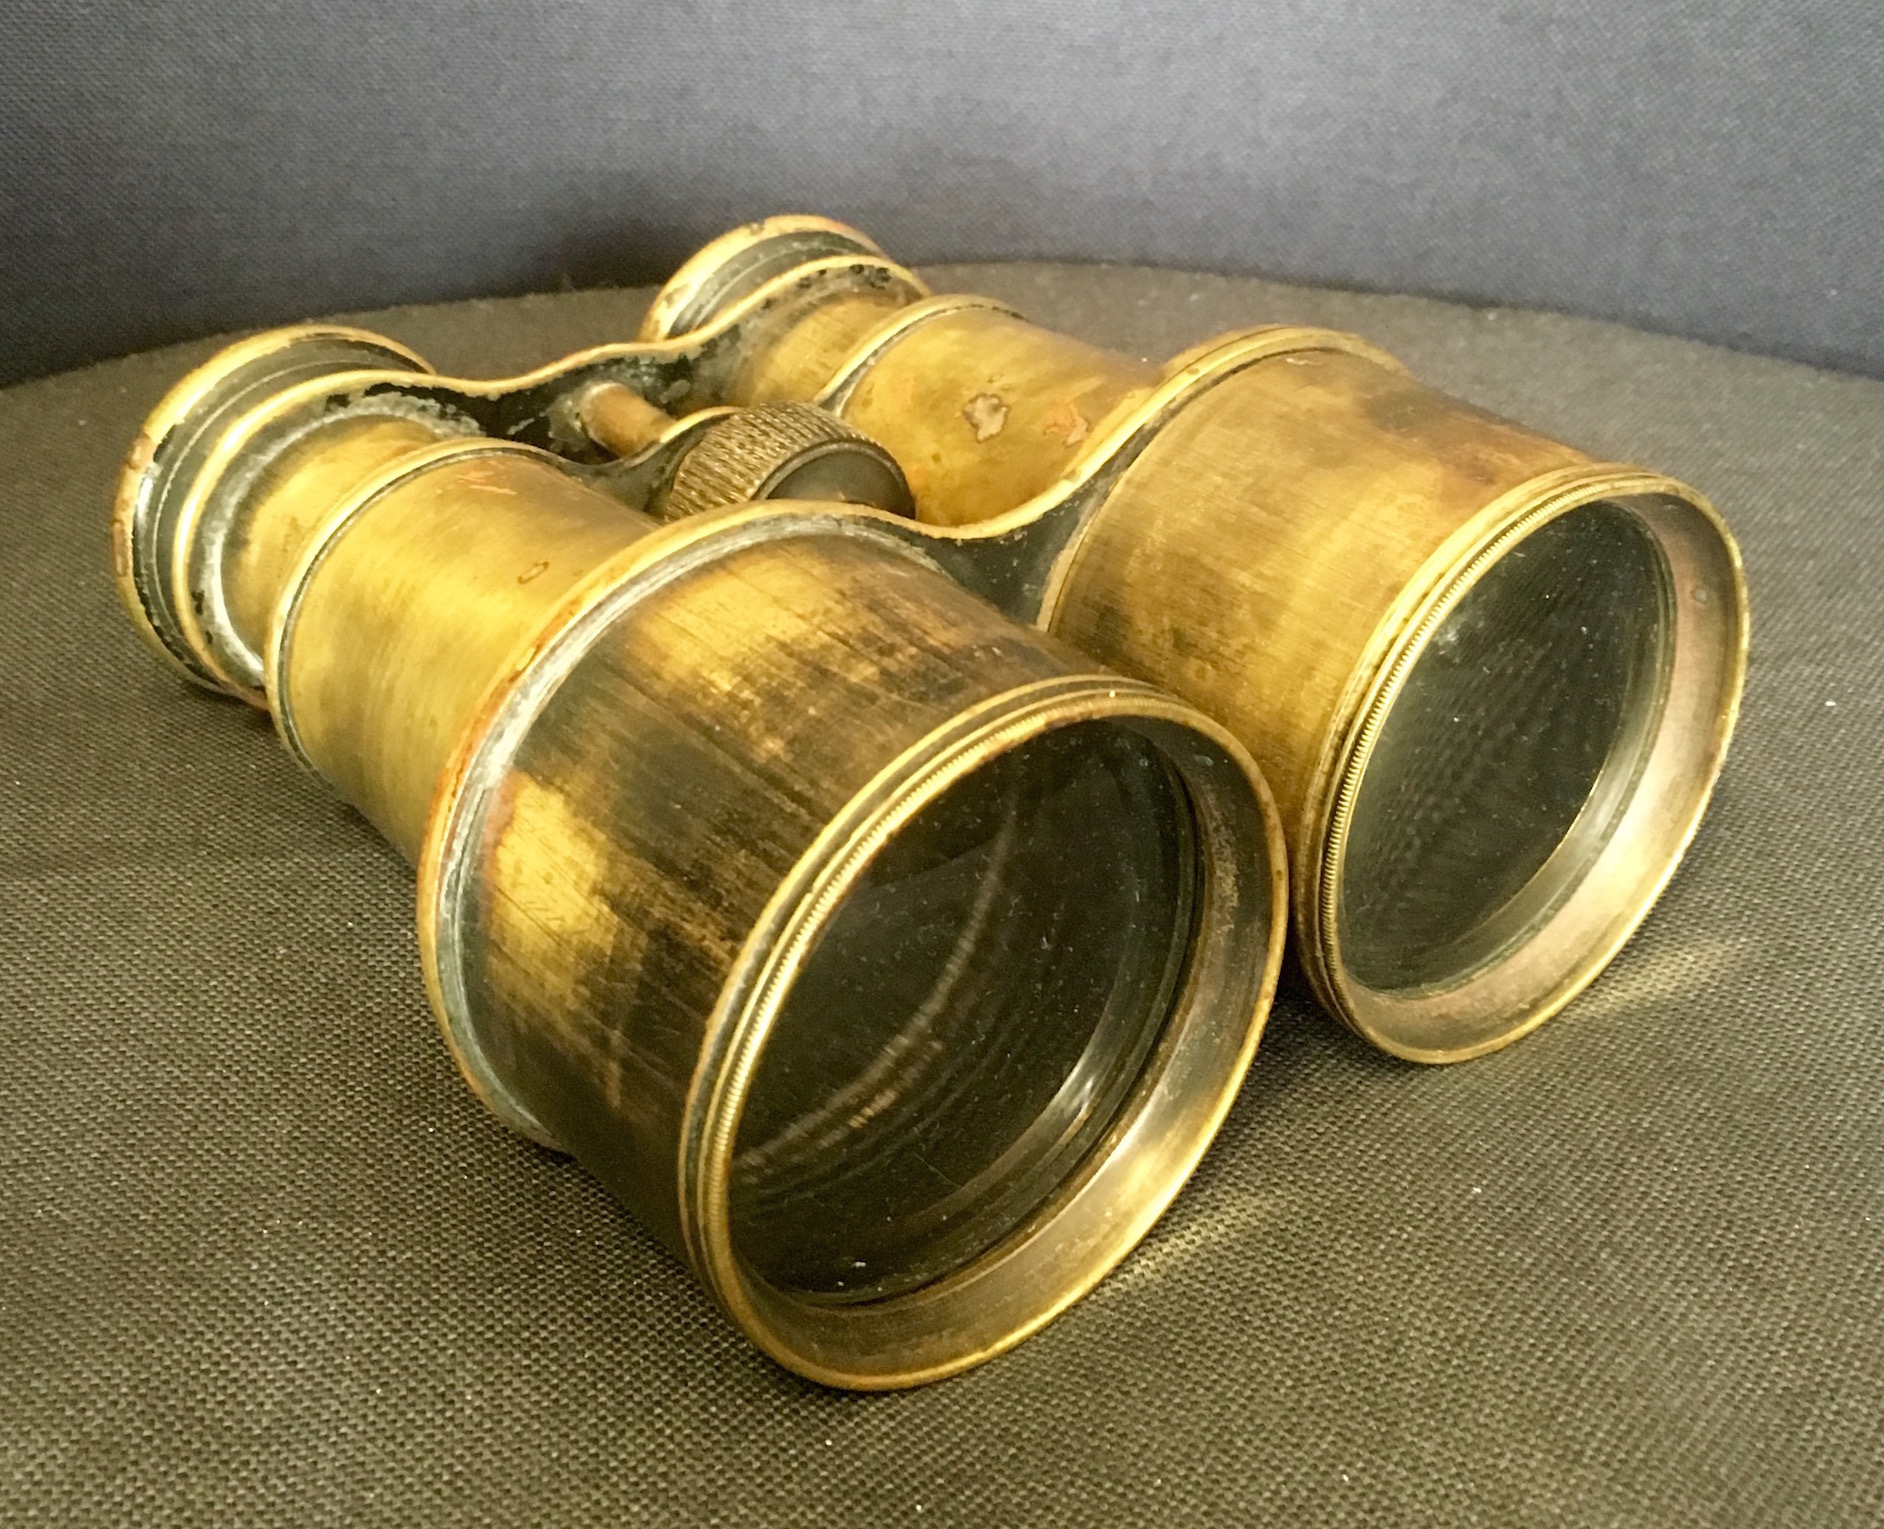 InterNACHI Inspector Museum - binoculars